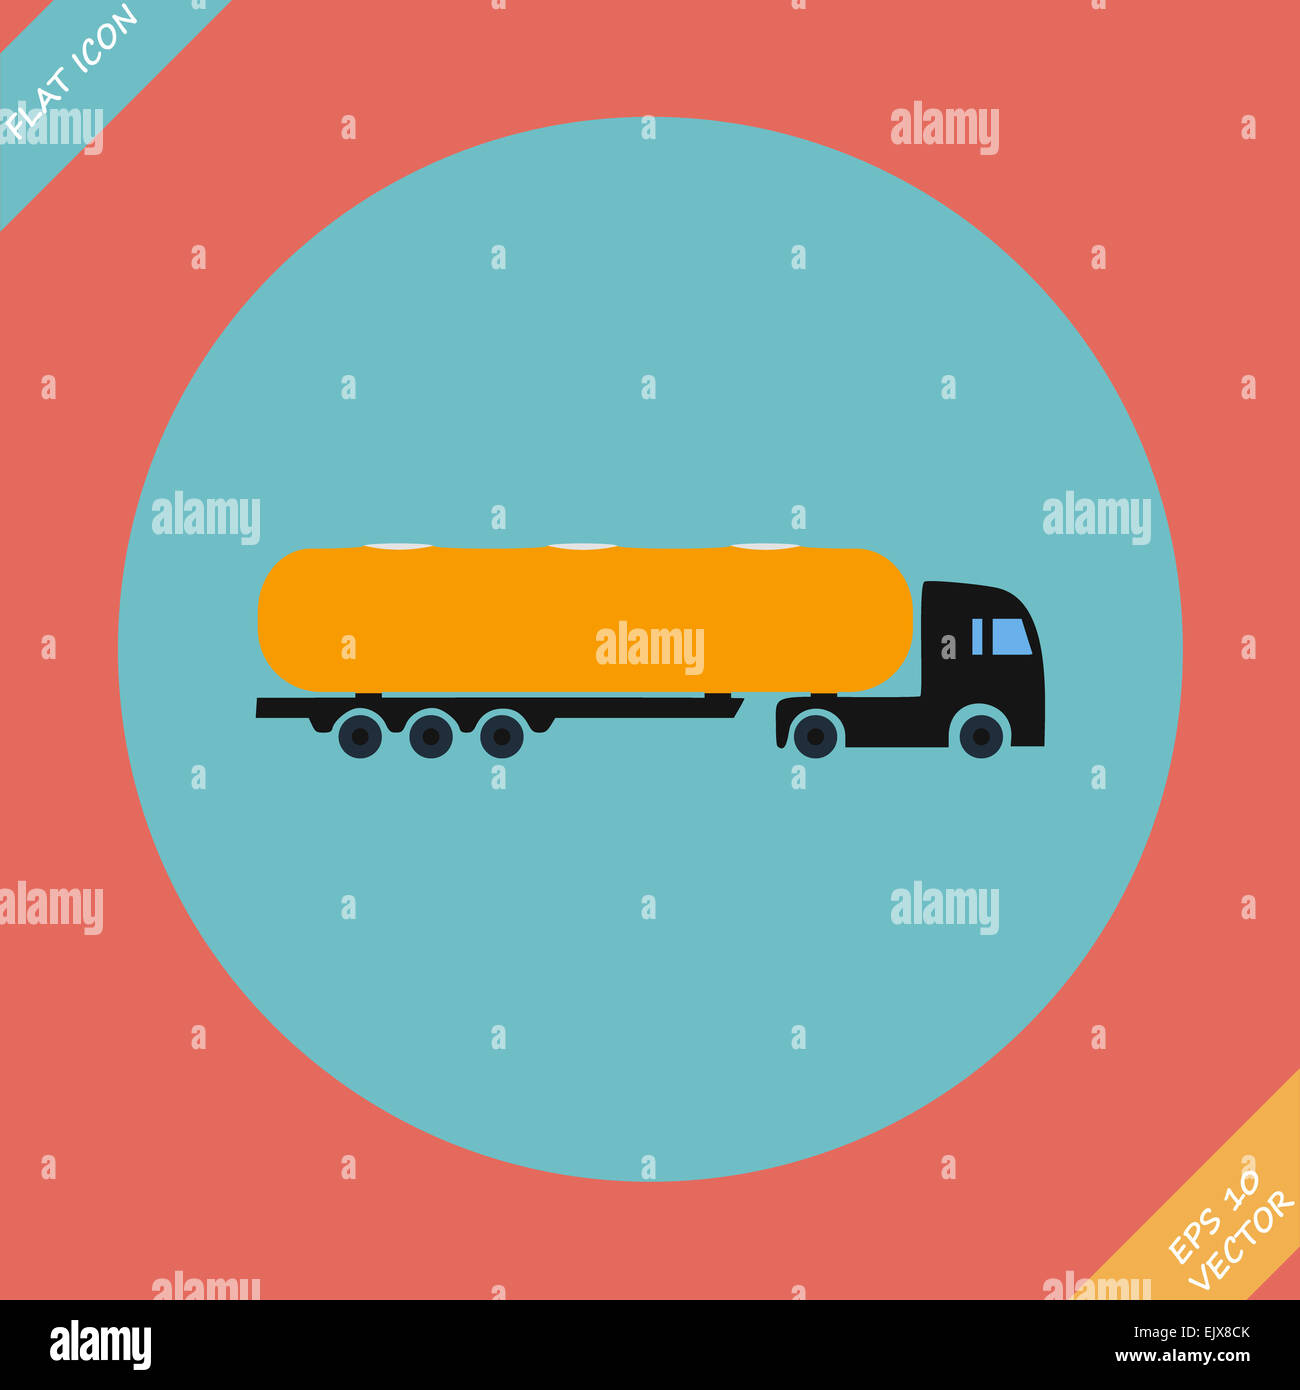 Icon trucks with tanks - vector illustration. Stock Photo